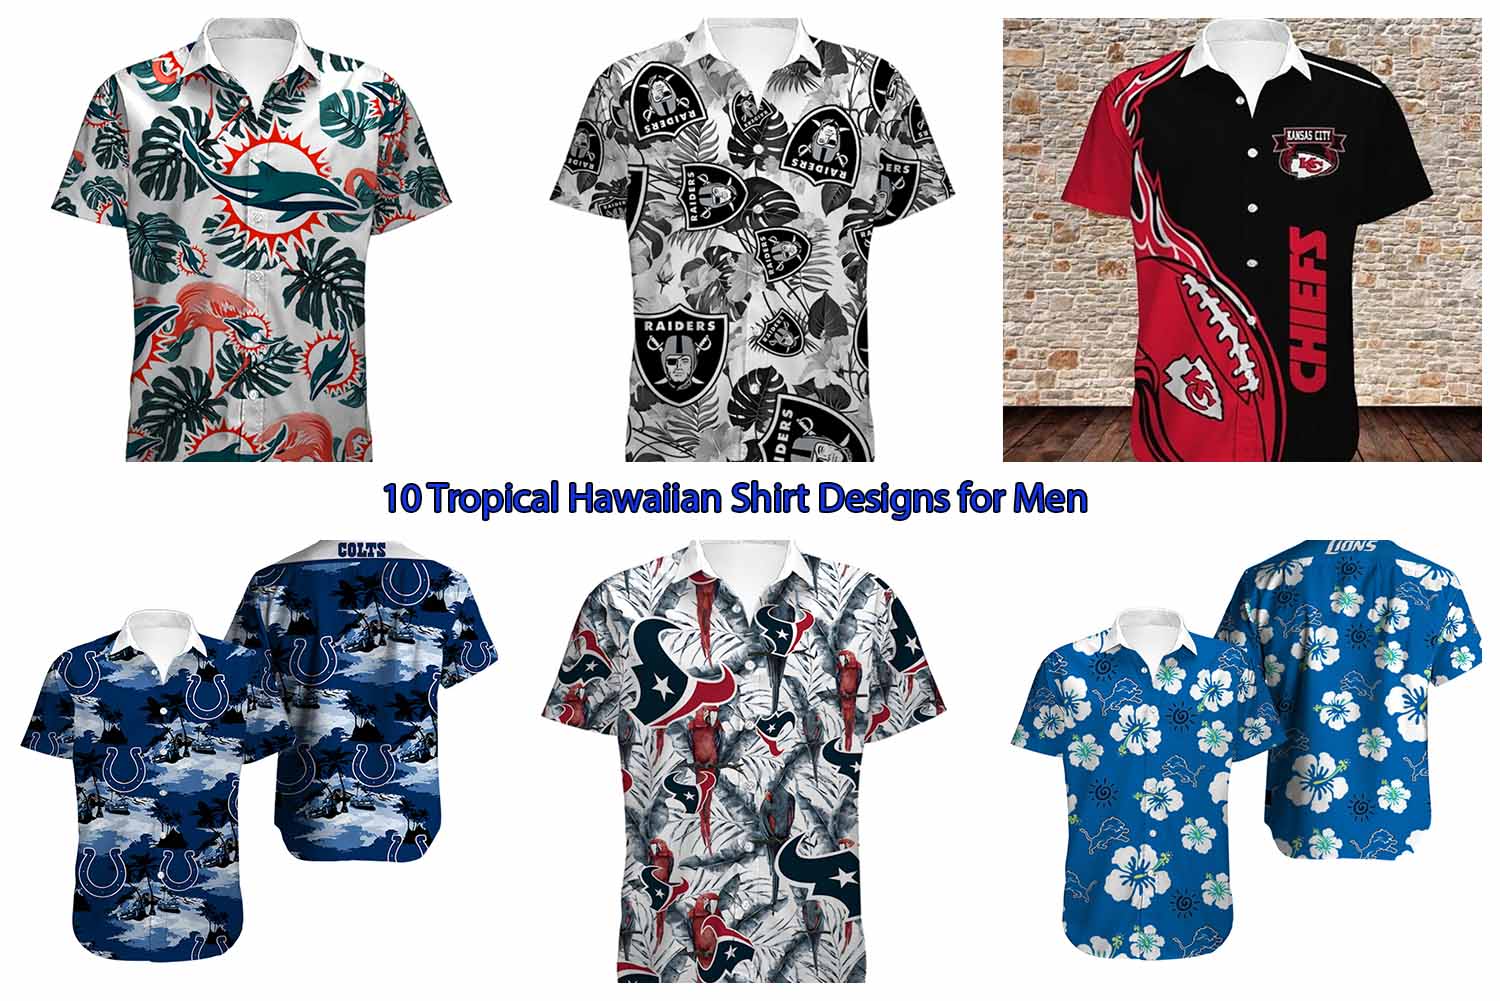 10 Tropical Hawaiian Shirt Designs for Men